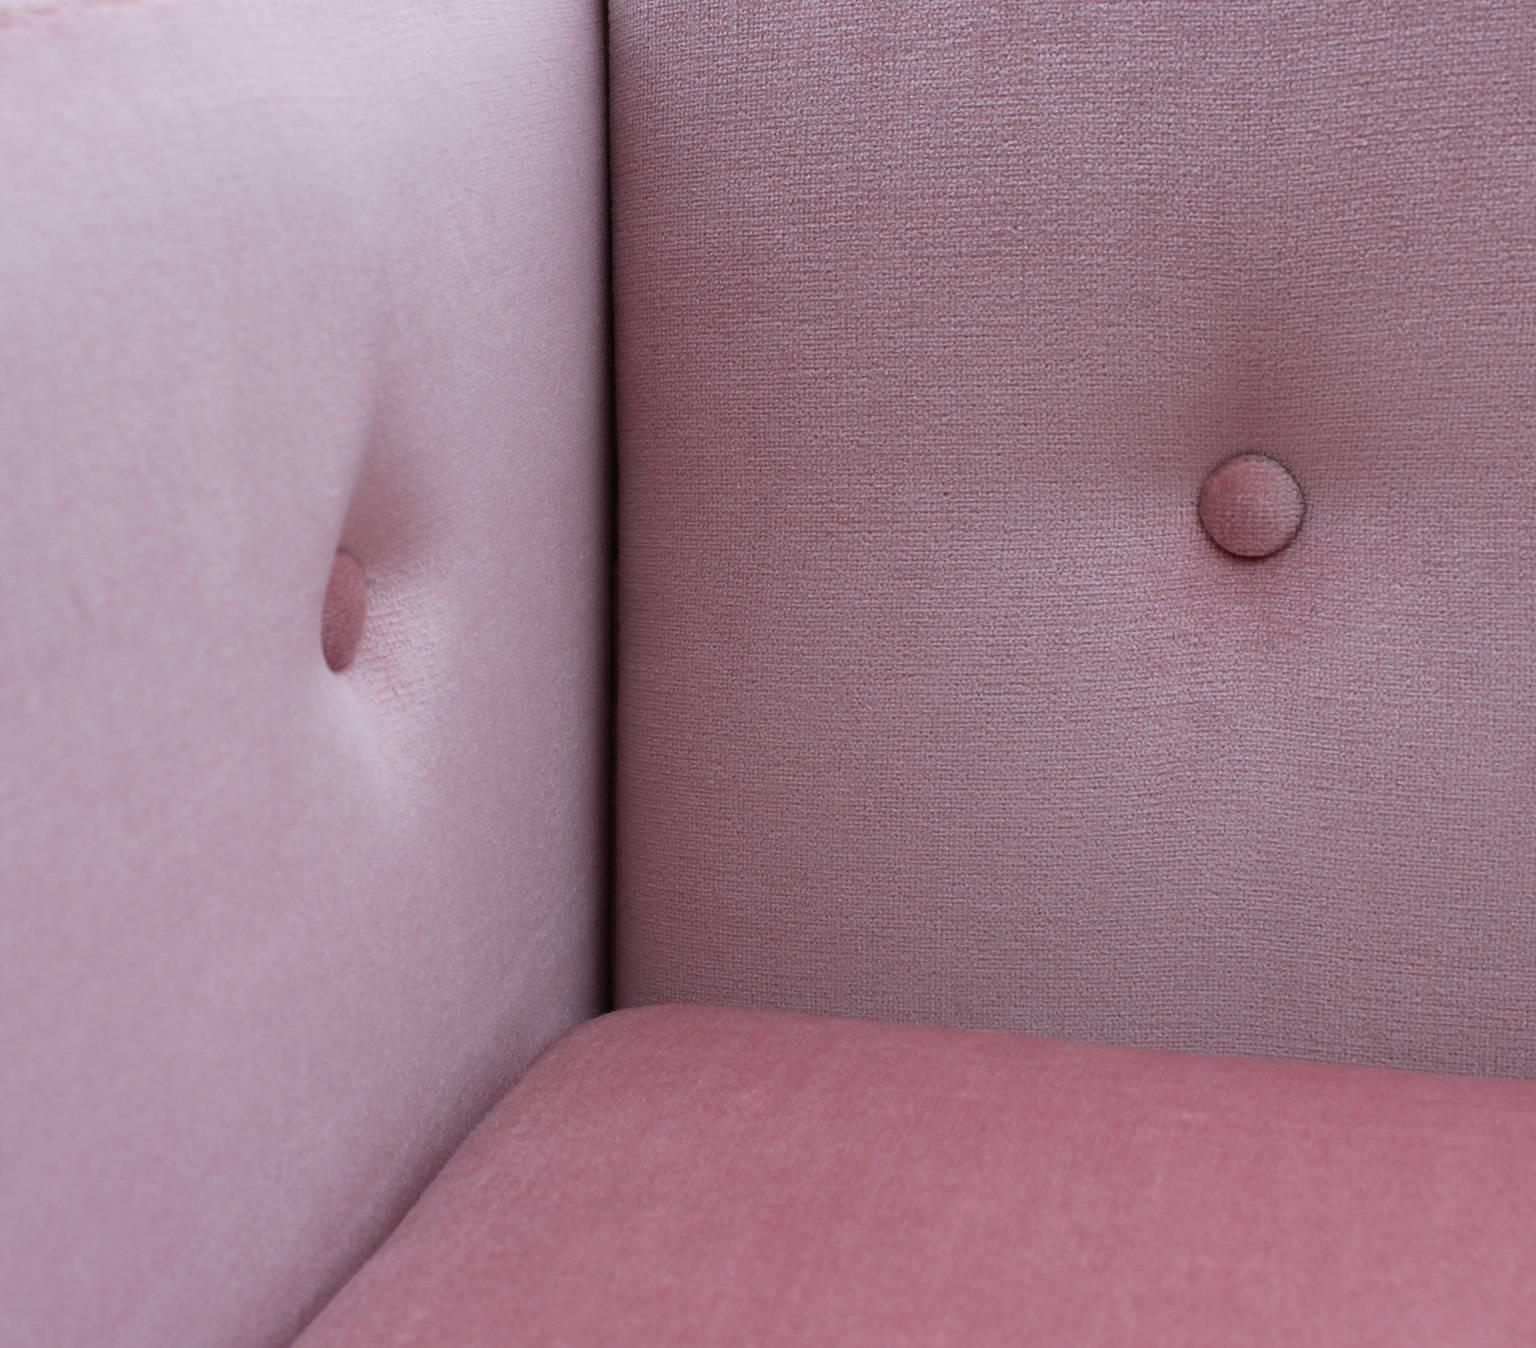 American Exquisite Rosewood Case Sofa in Pale Pink Velvet